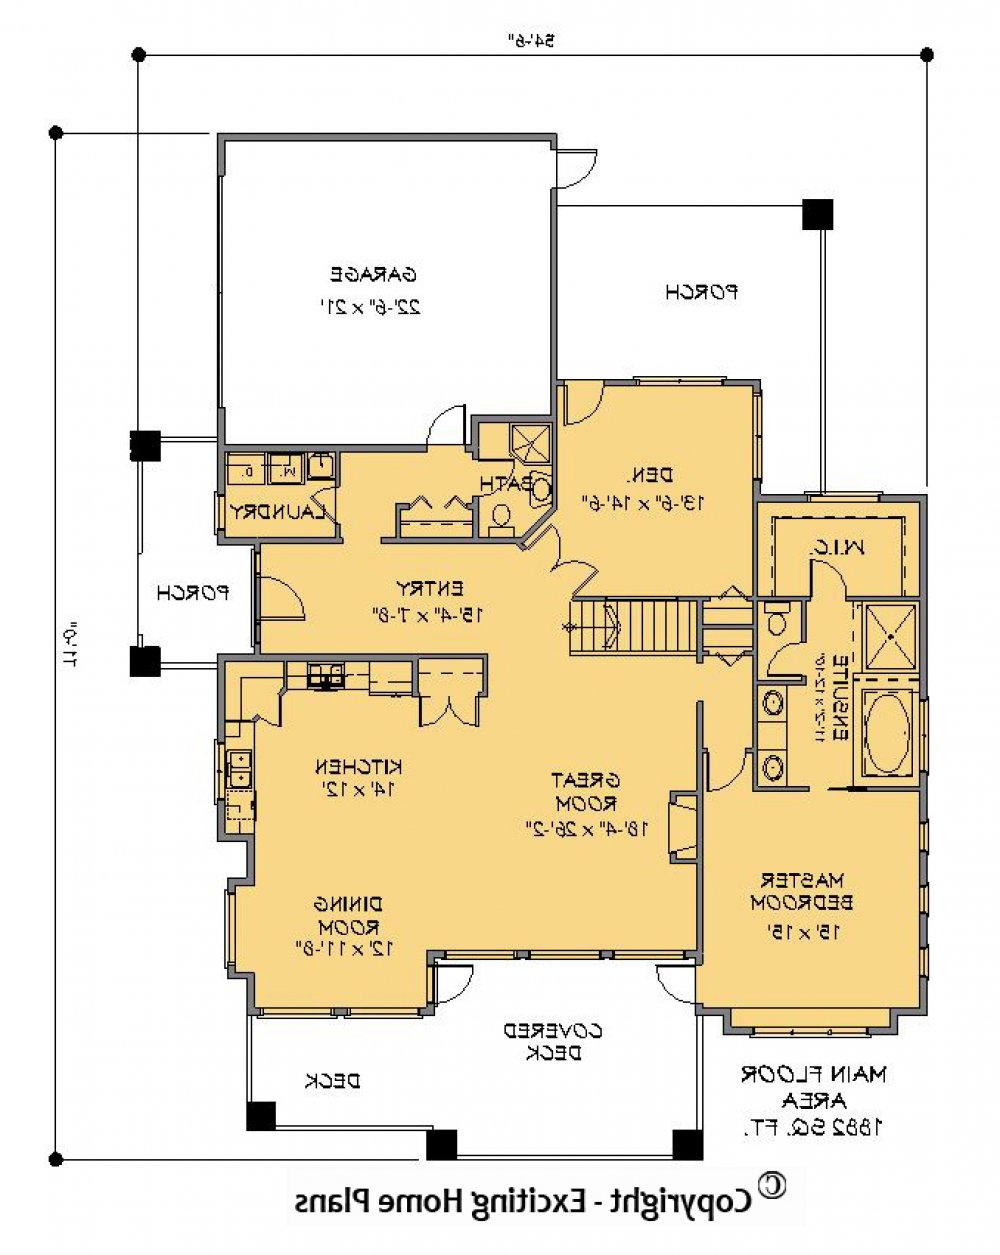 House Plan E1195-10 Main Floor Plan REVERSE